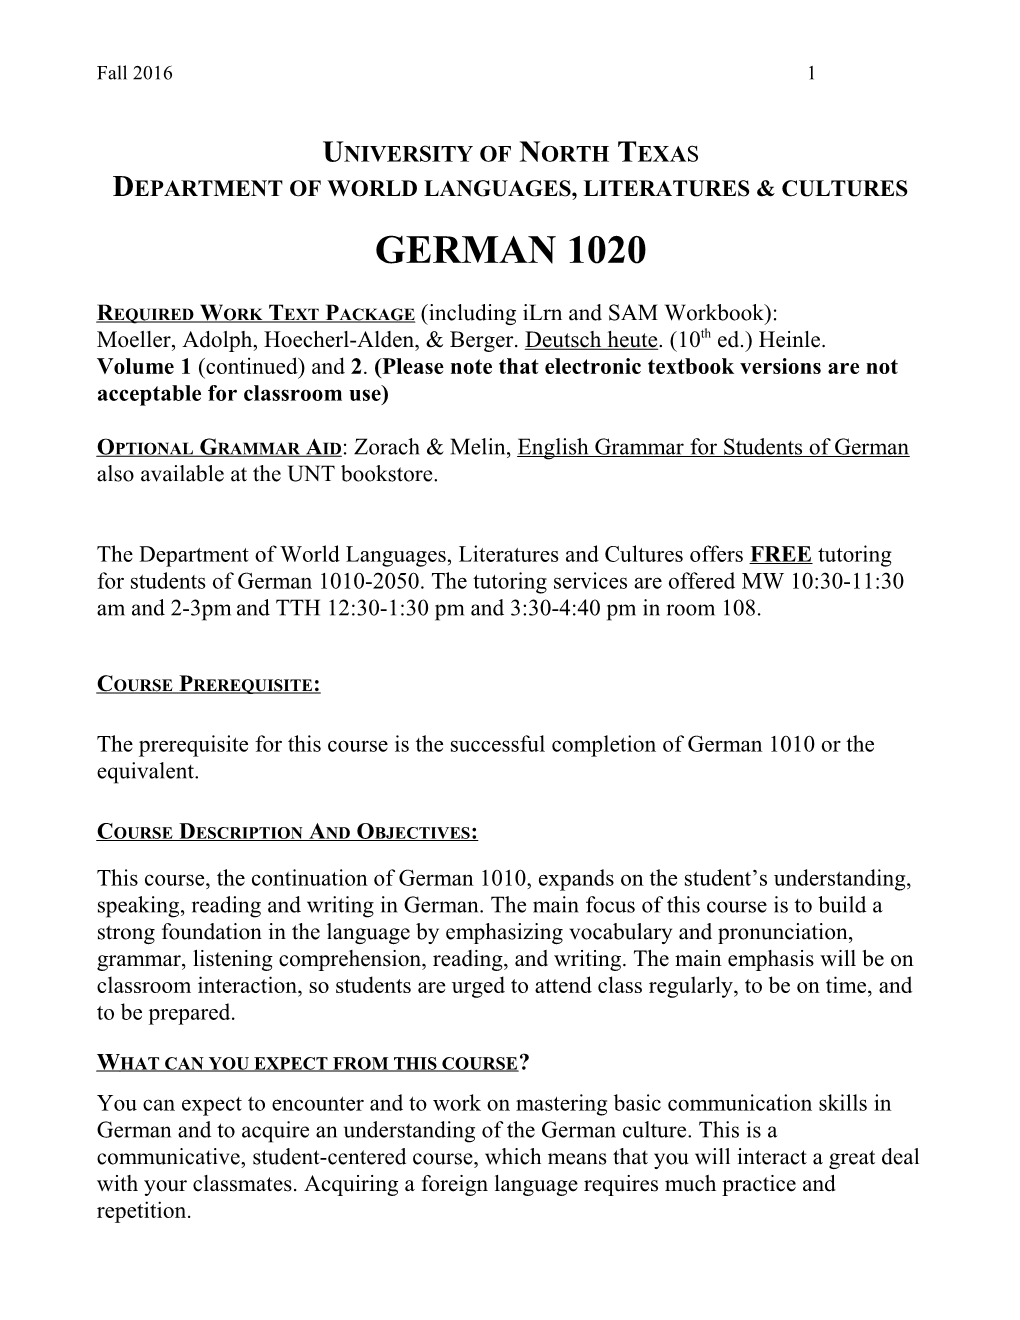 University of North Texa S Department of World Languages, Literatures & Cultures German 1020 s1